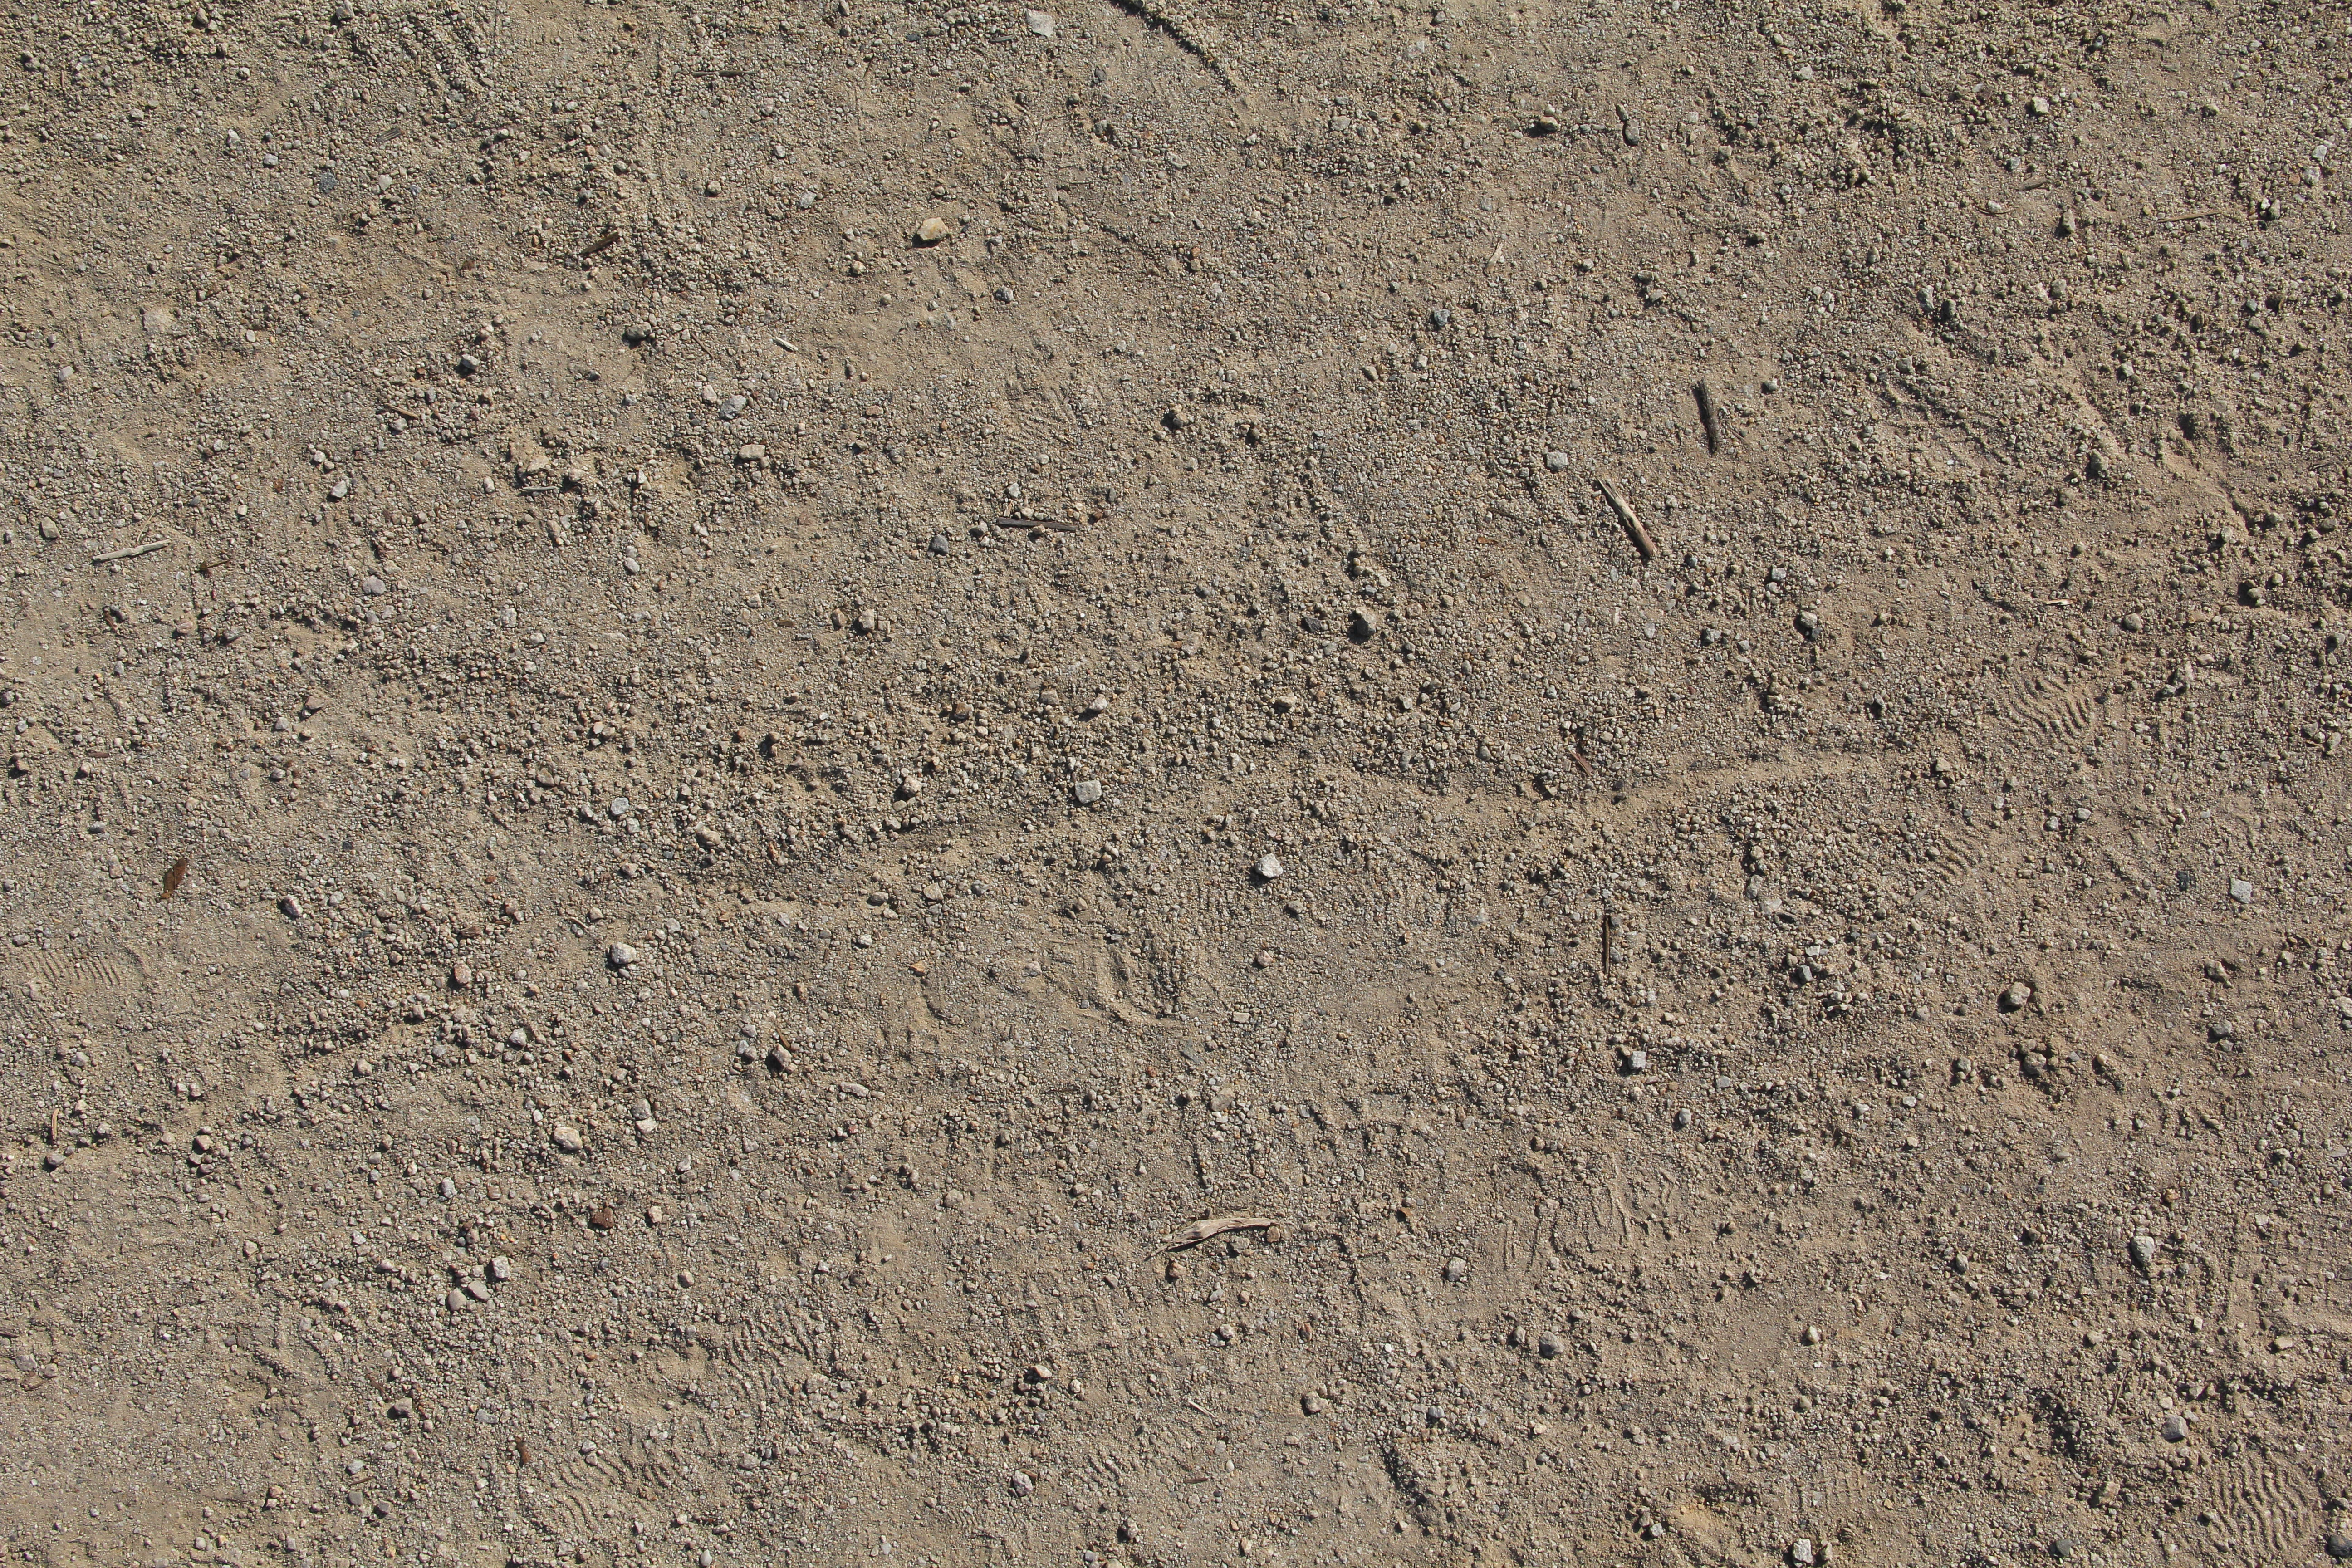 Ground texture dirt flat footprint sandy pebble grunge road path ...